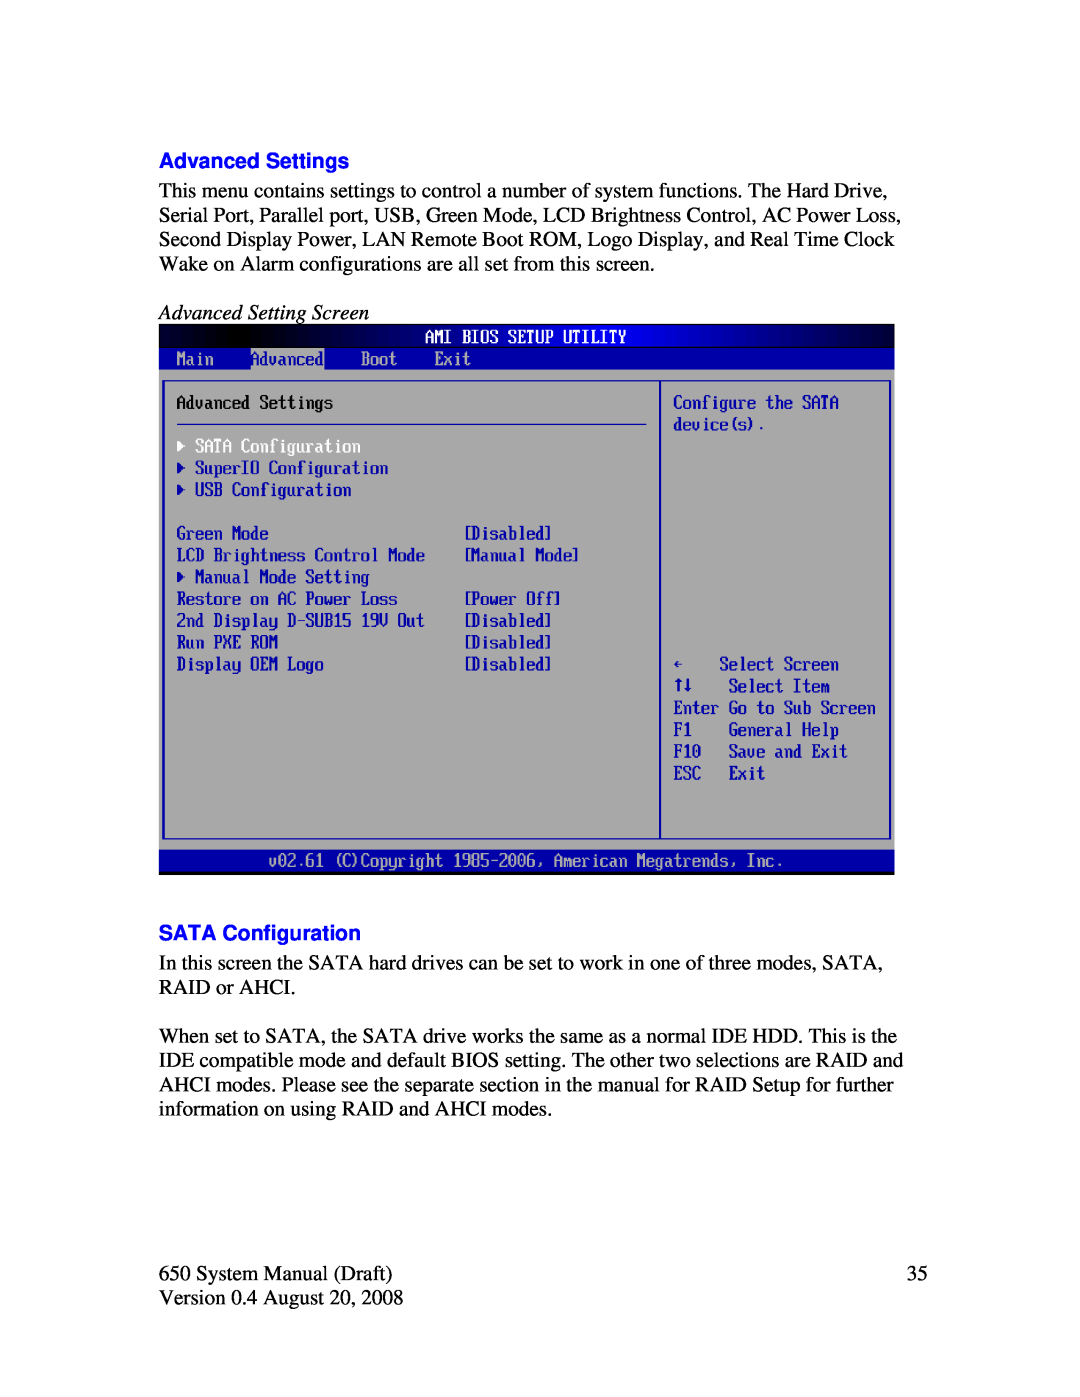 Intel J2 650 system manual Advanced Settings, Advanced Setting Screen, SATA Configuration 